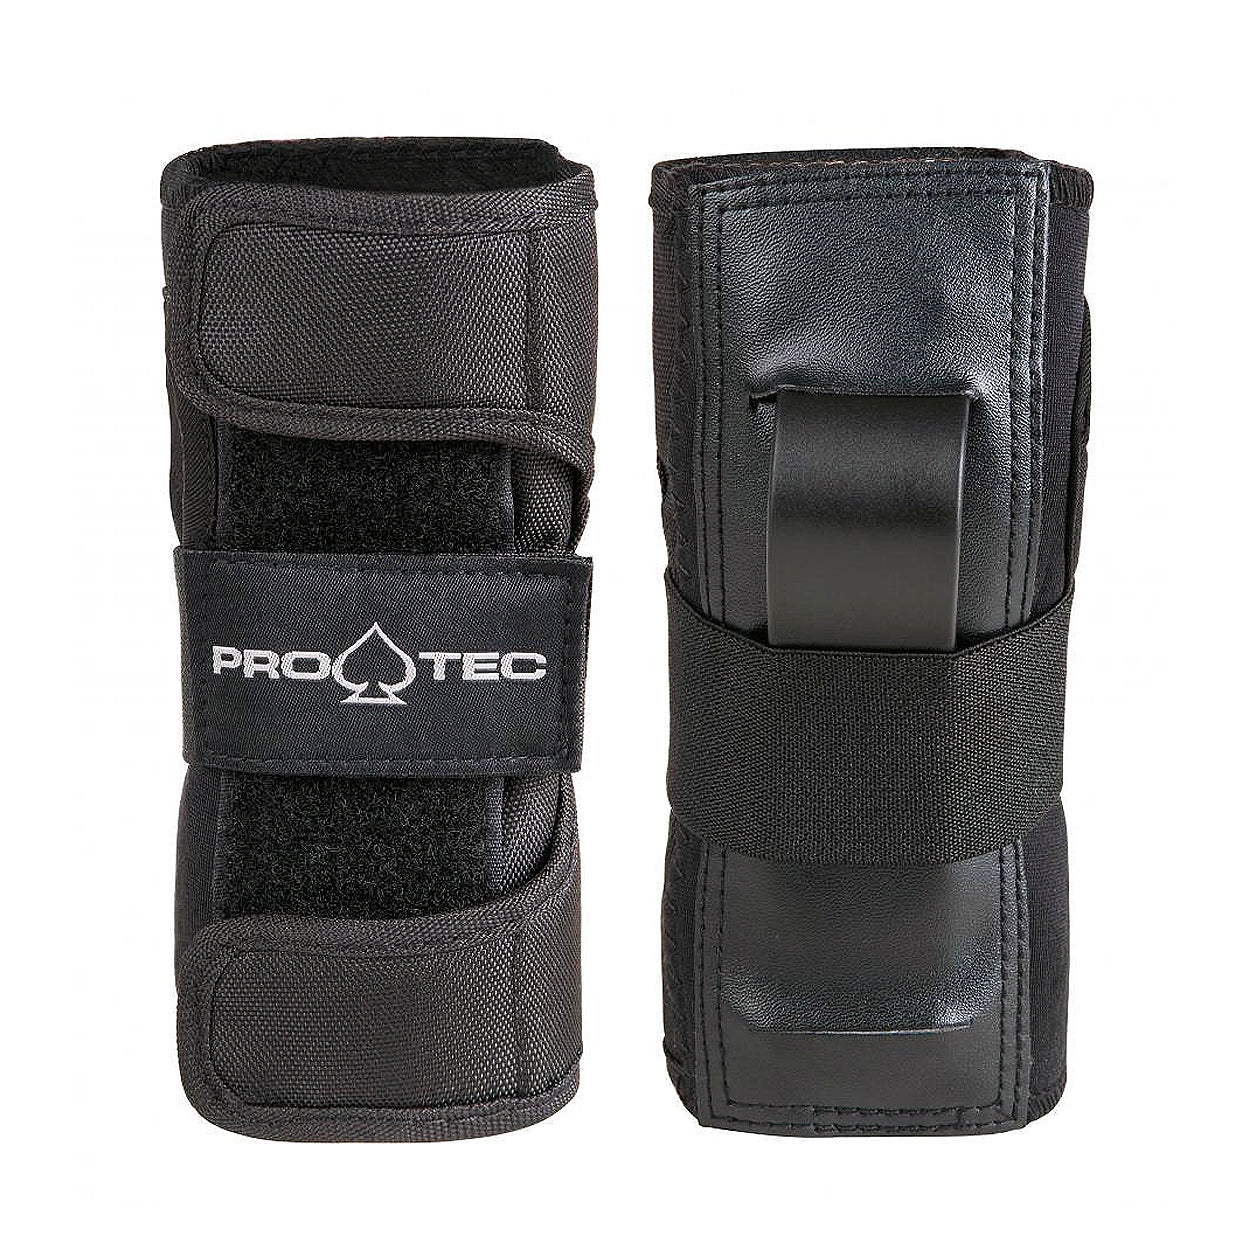 Pro-Tec Pads Street Wrist Guard - Black - Prime Delux Store